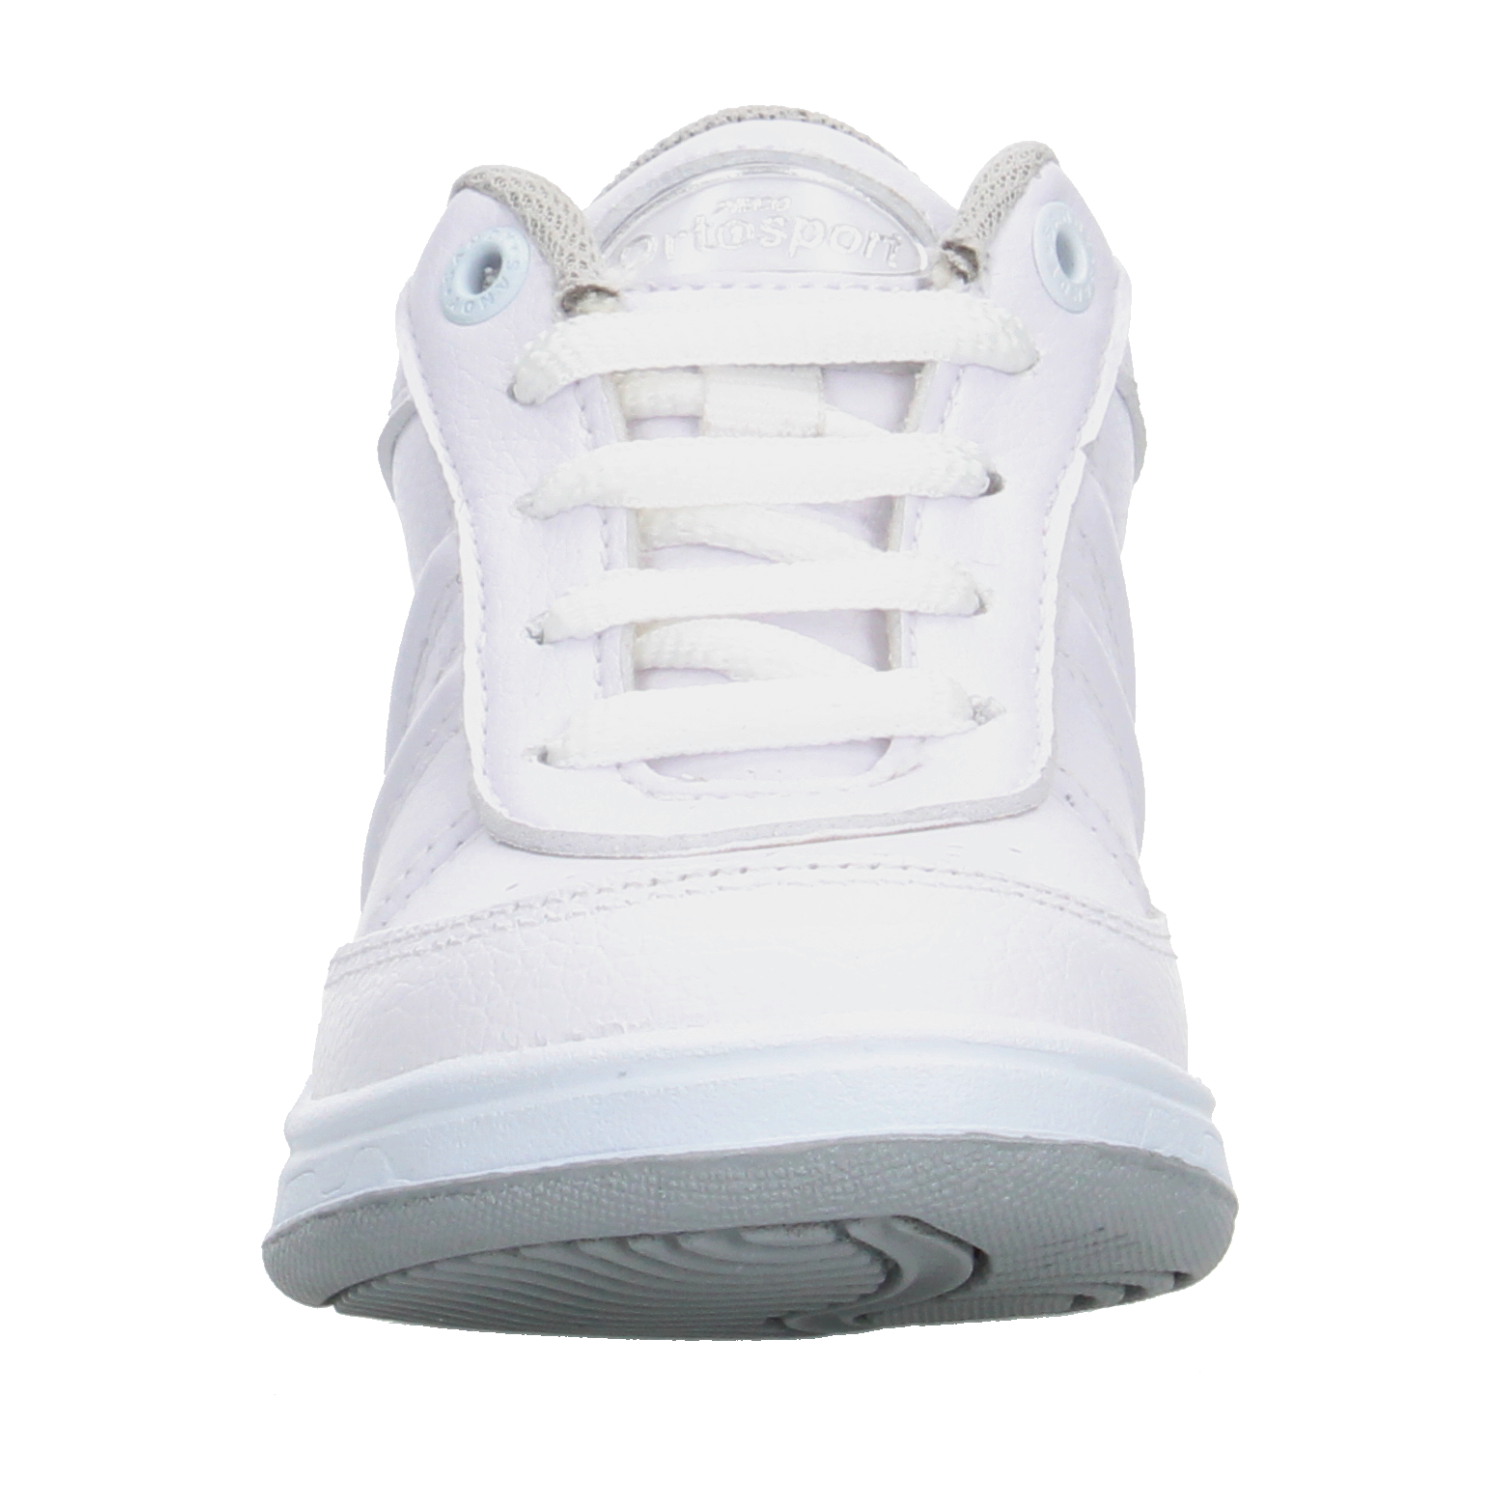 Zapato Ortopédico Pie-co Blanco para Niño [PPP160]